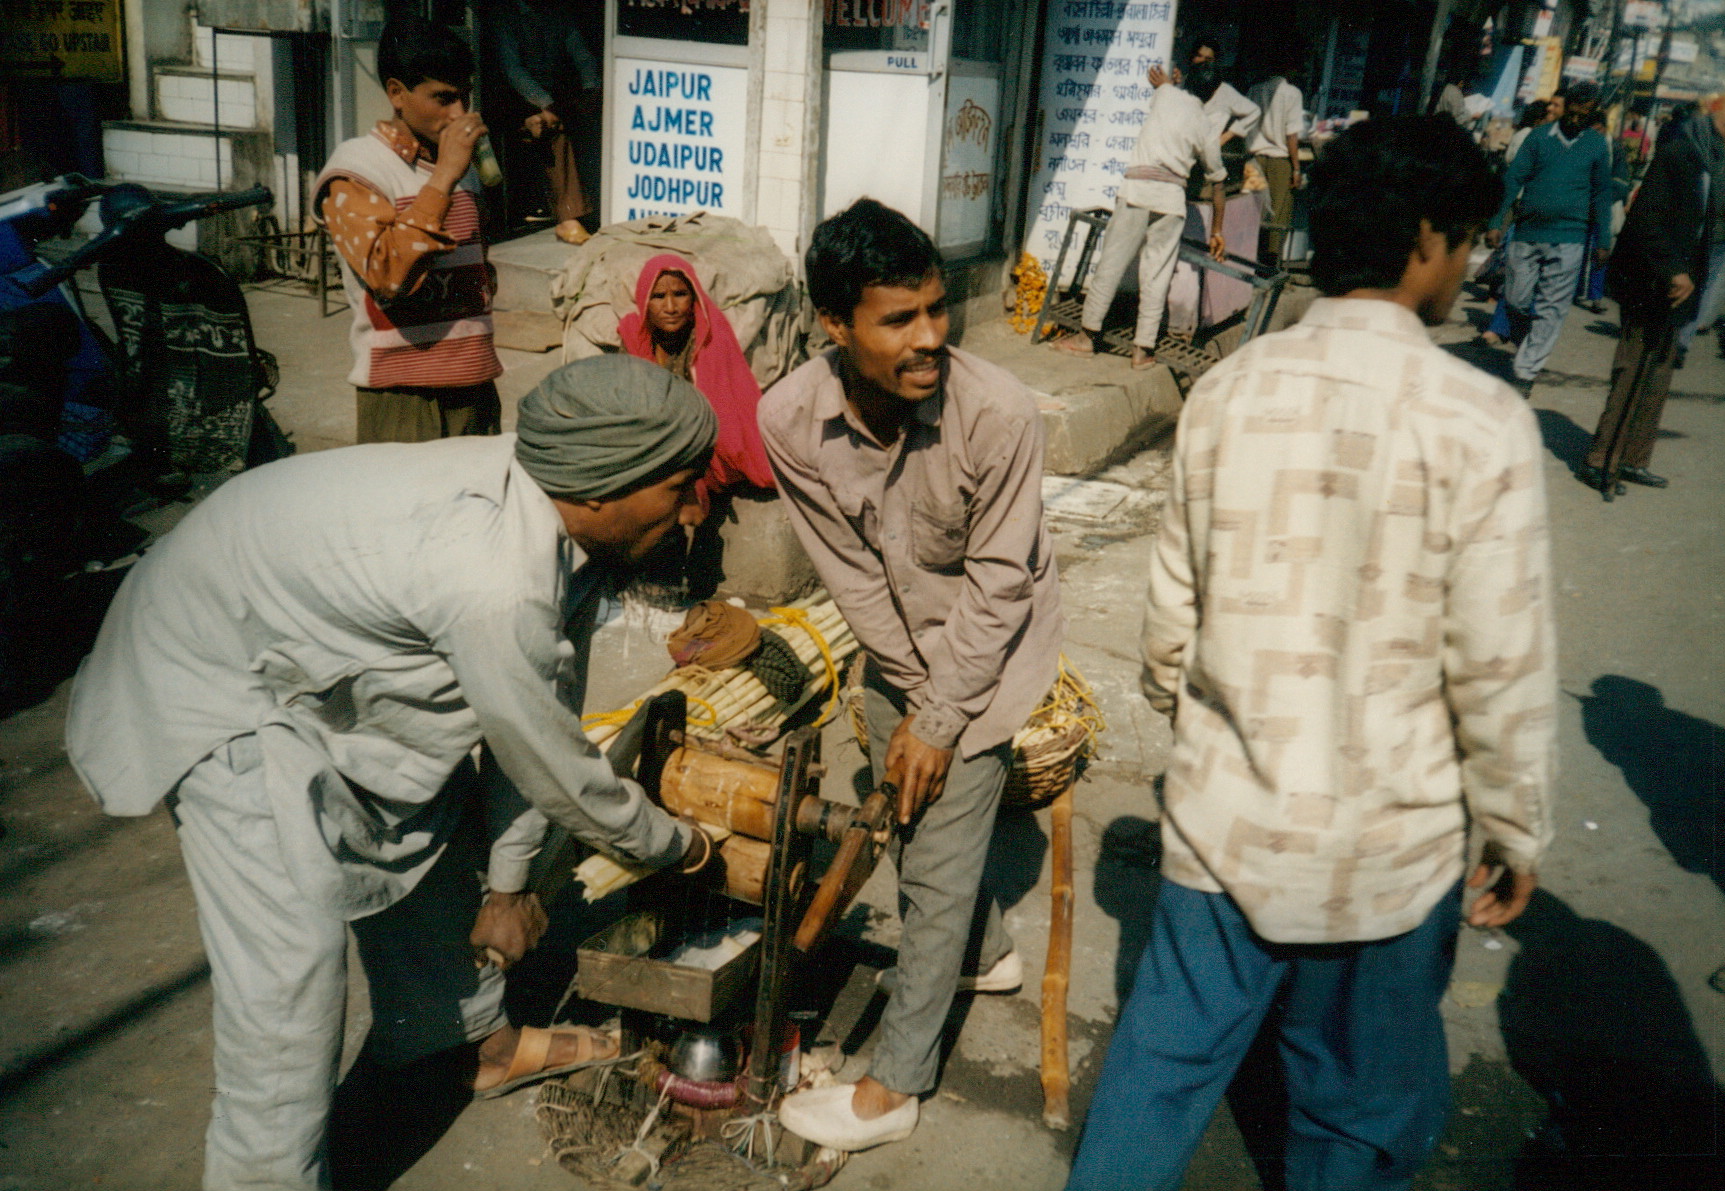 Making Sugar Cane in Street India 1997